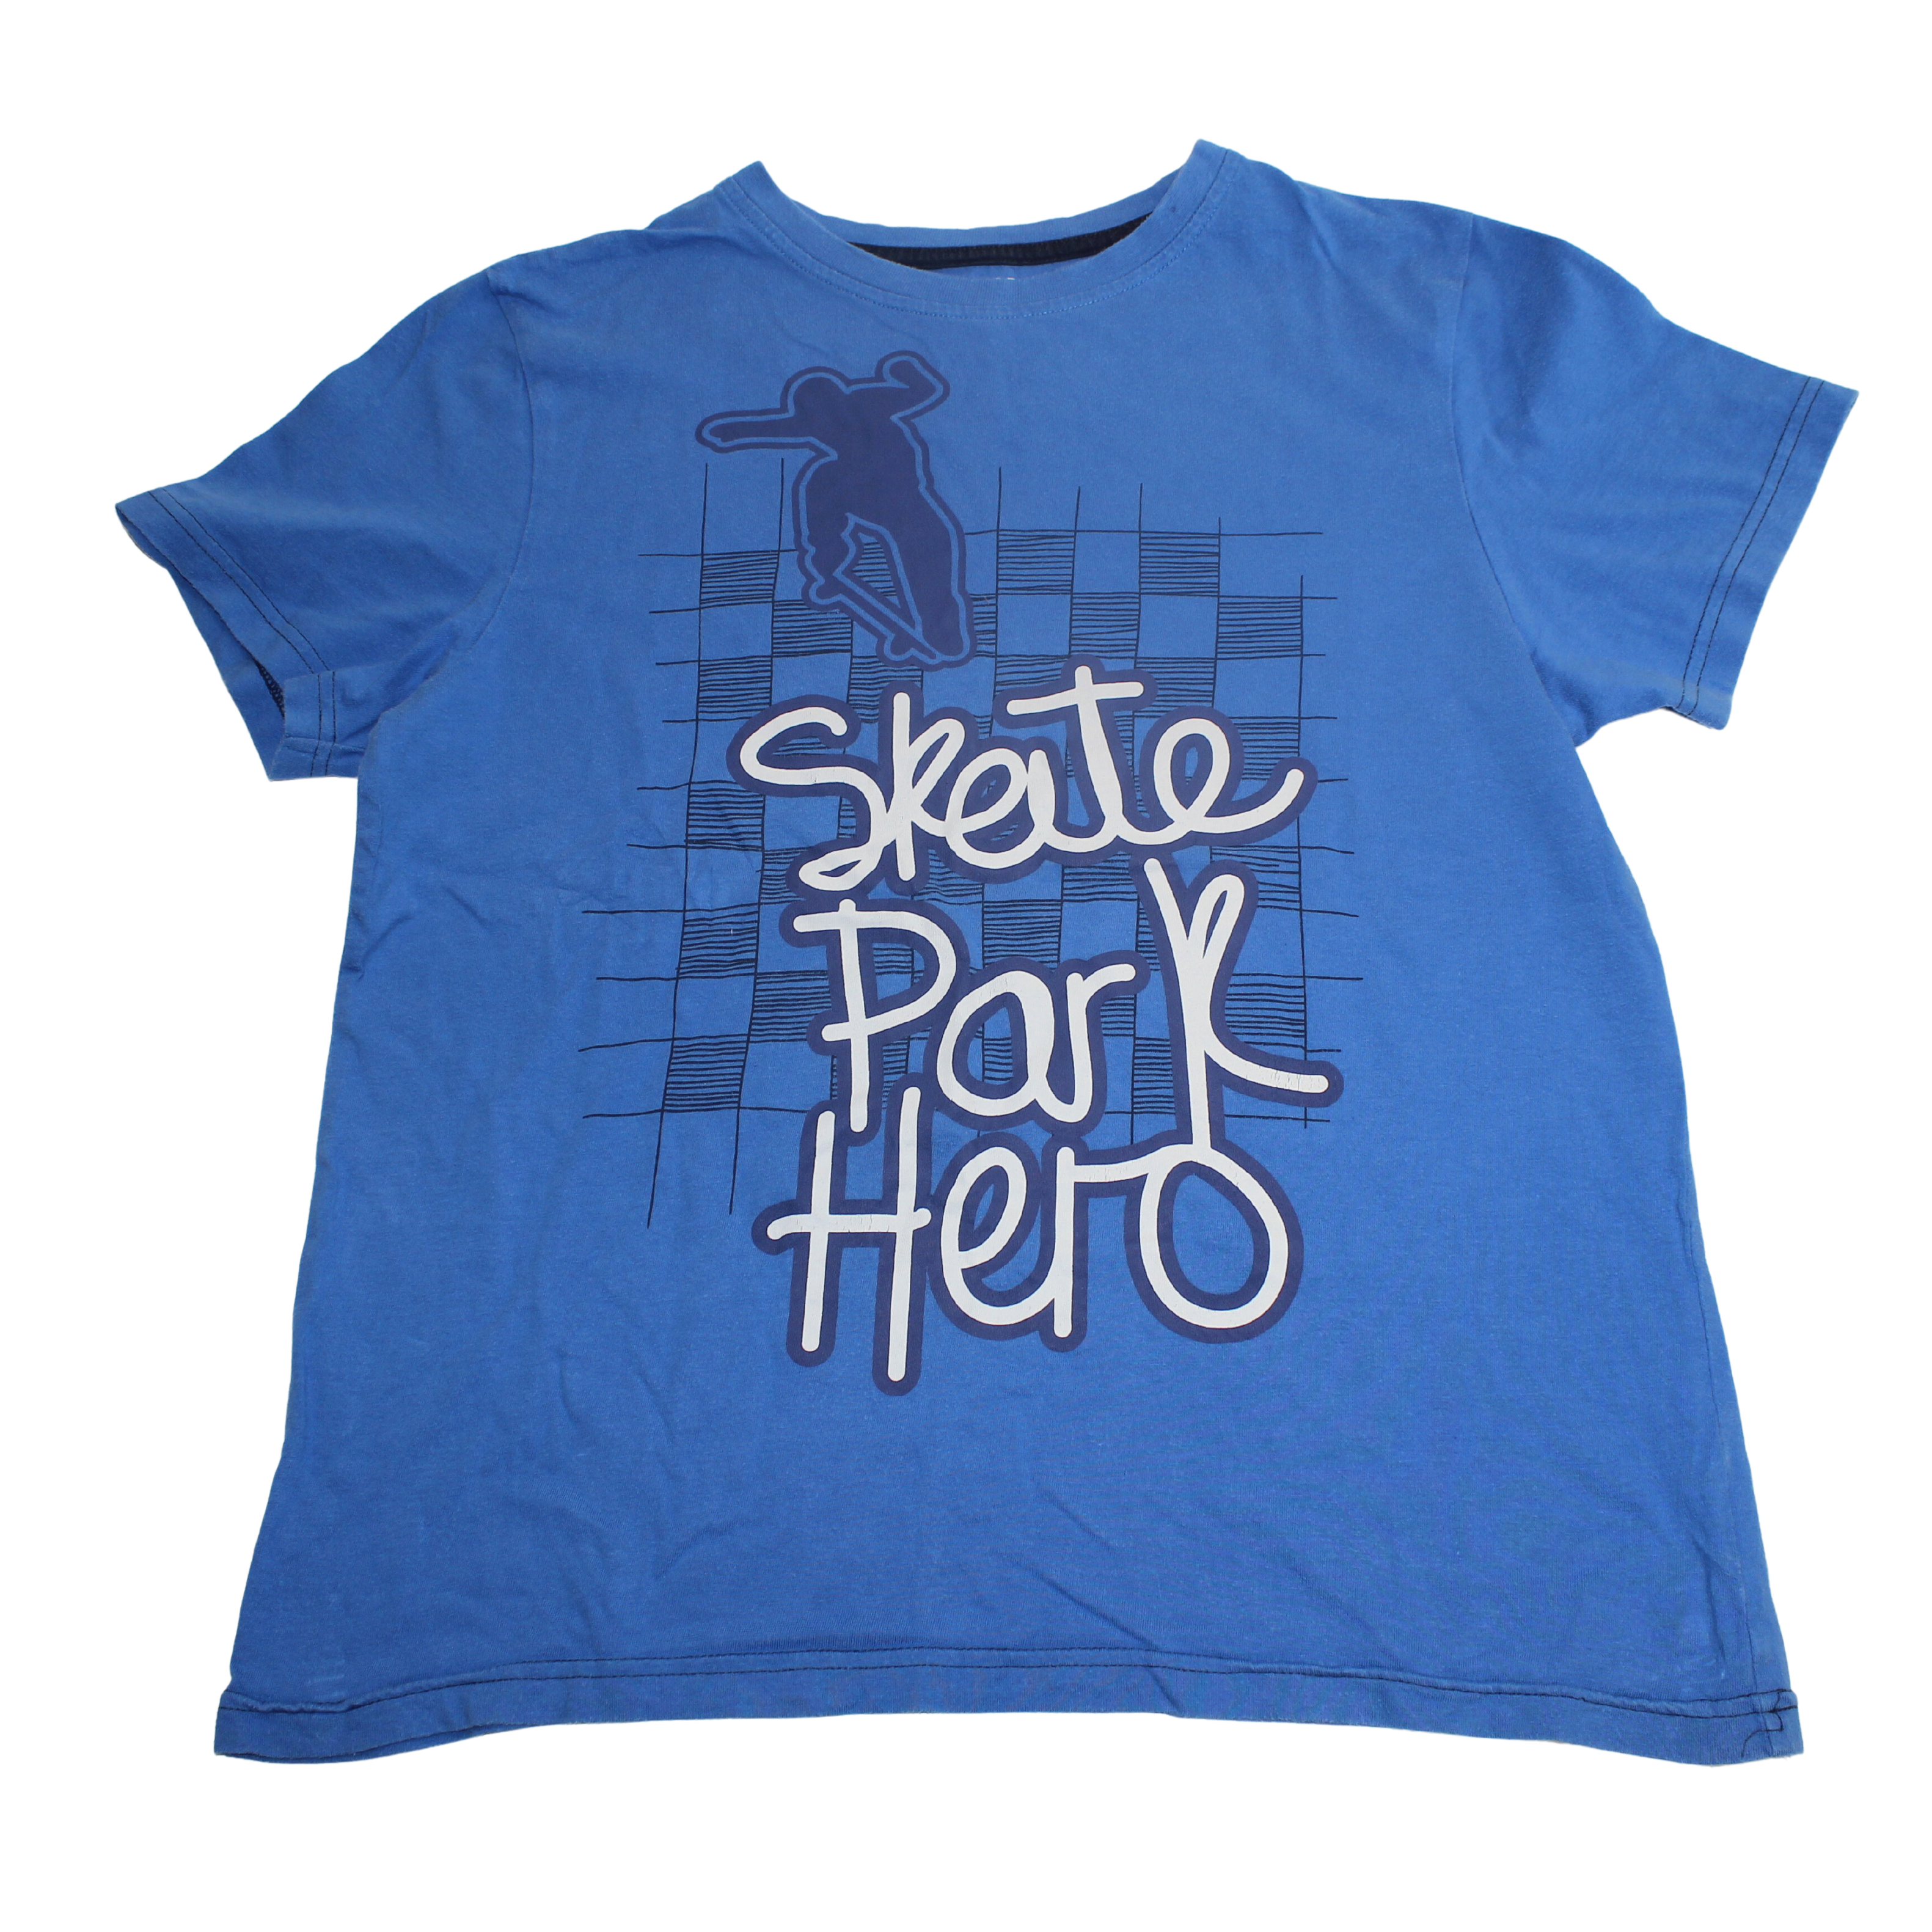 Skate Park Hero Tee